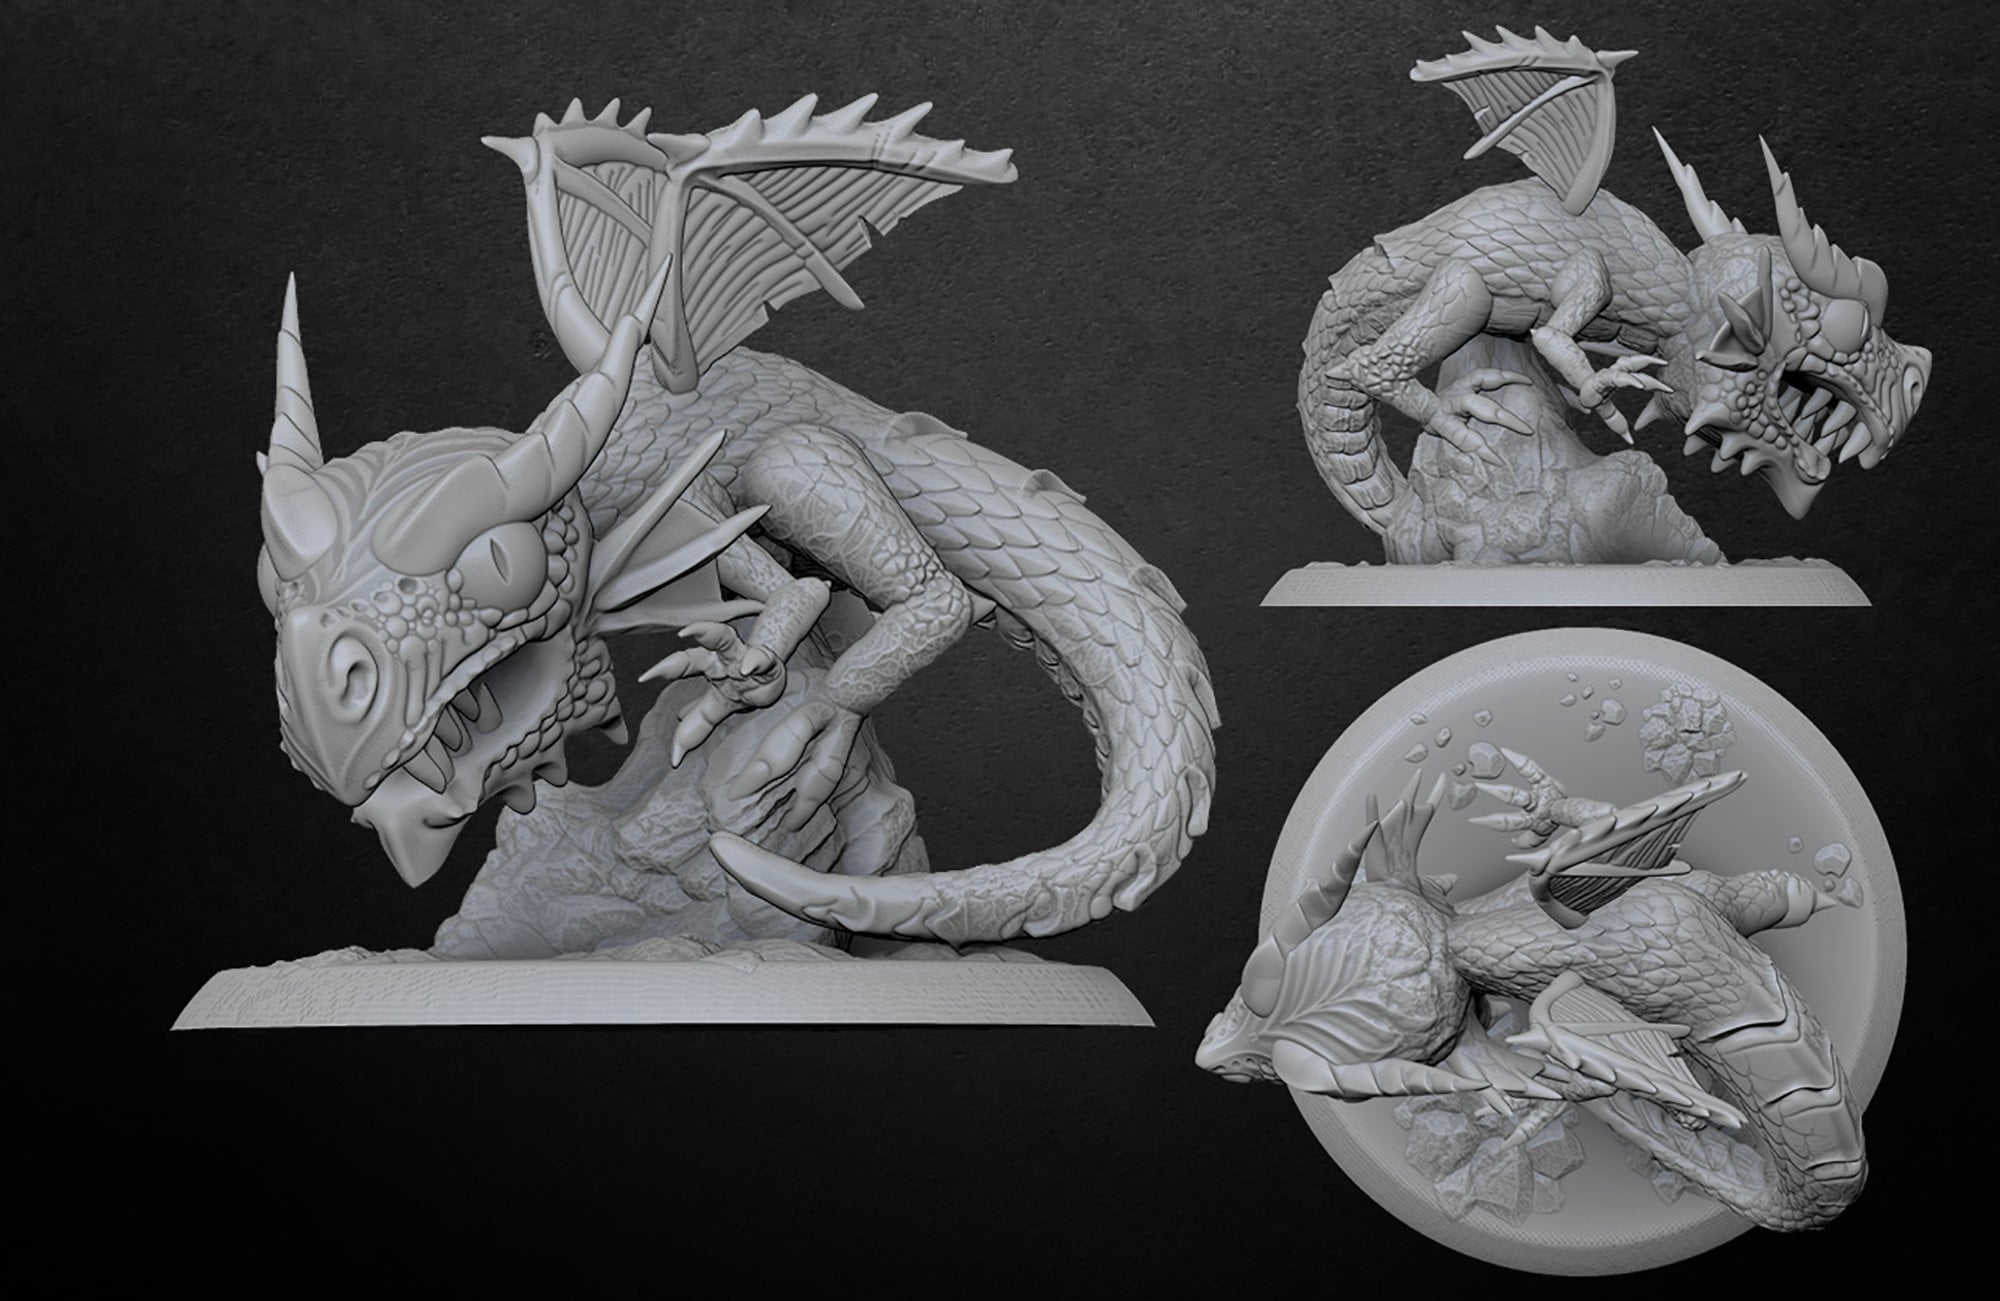 RED DRAGON 9x11 cm | CHIBI Style | Figurine | Dice Head | Resin 3D Print-Figurines